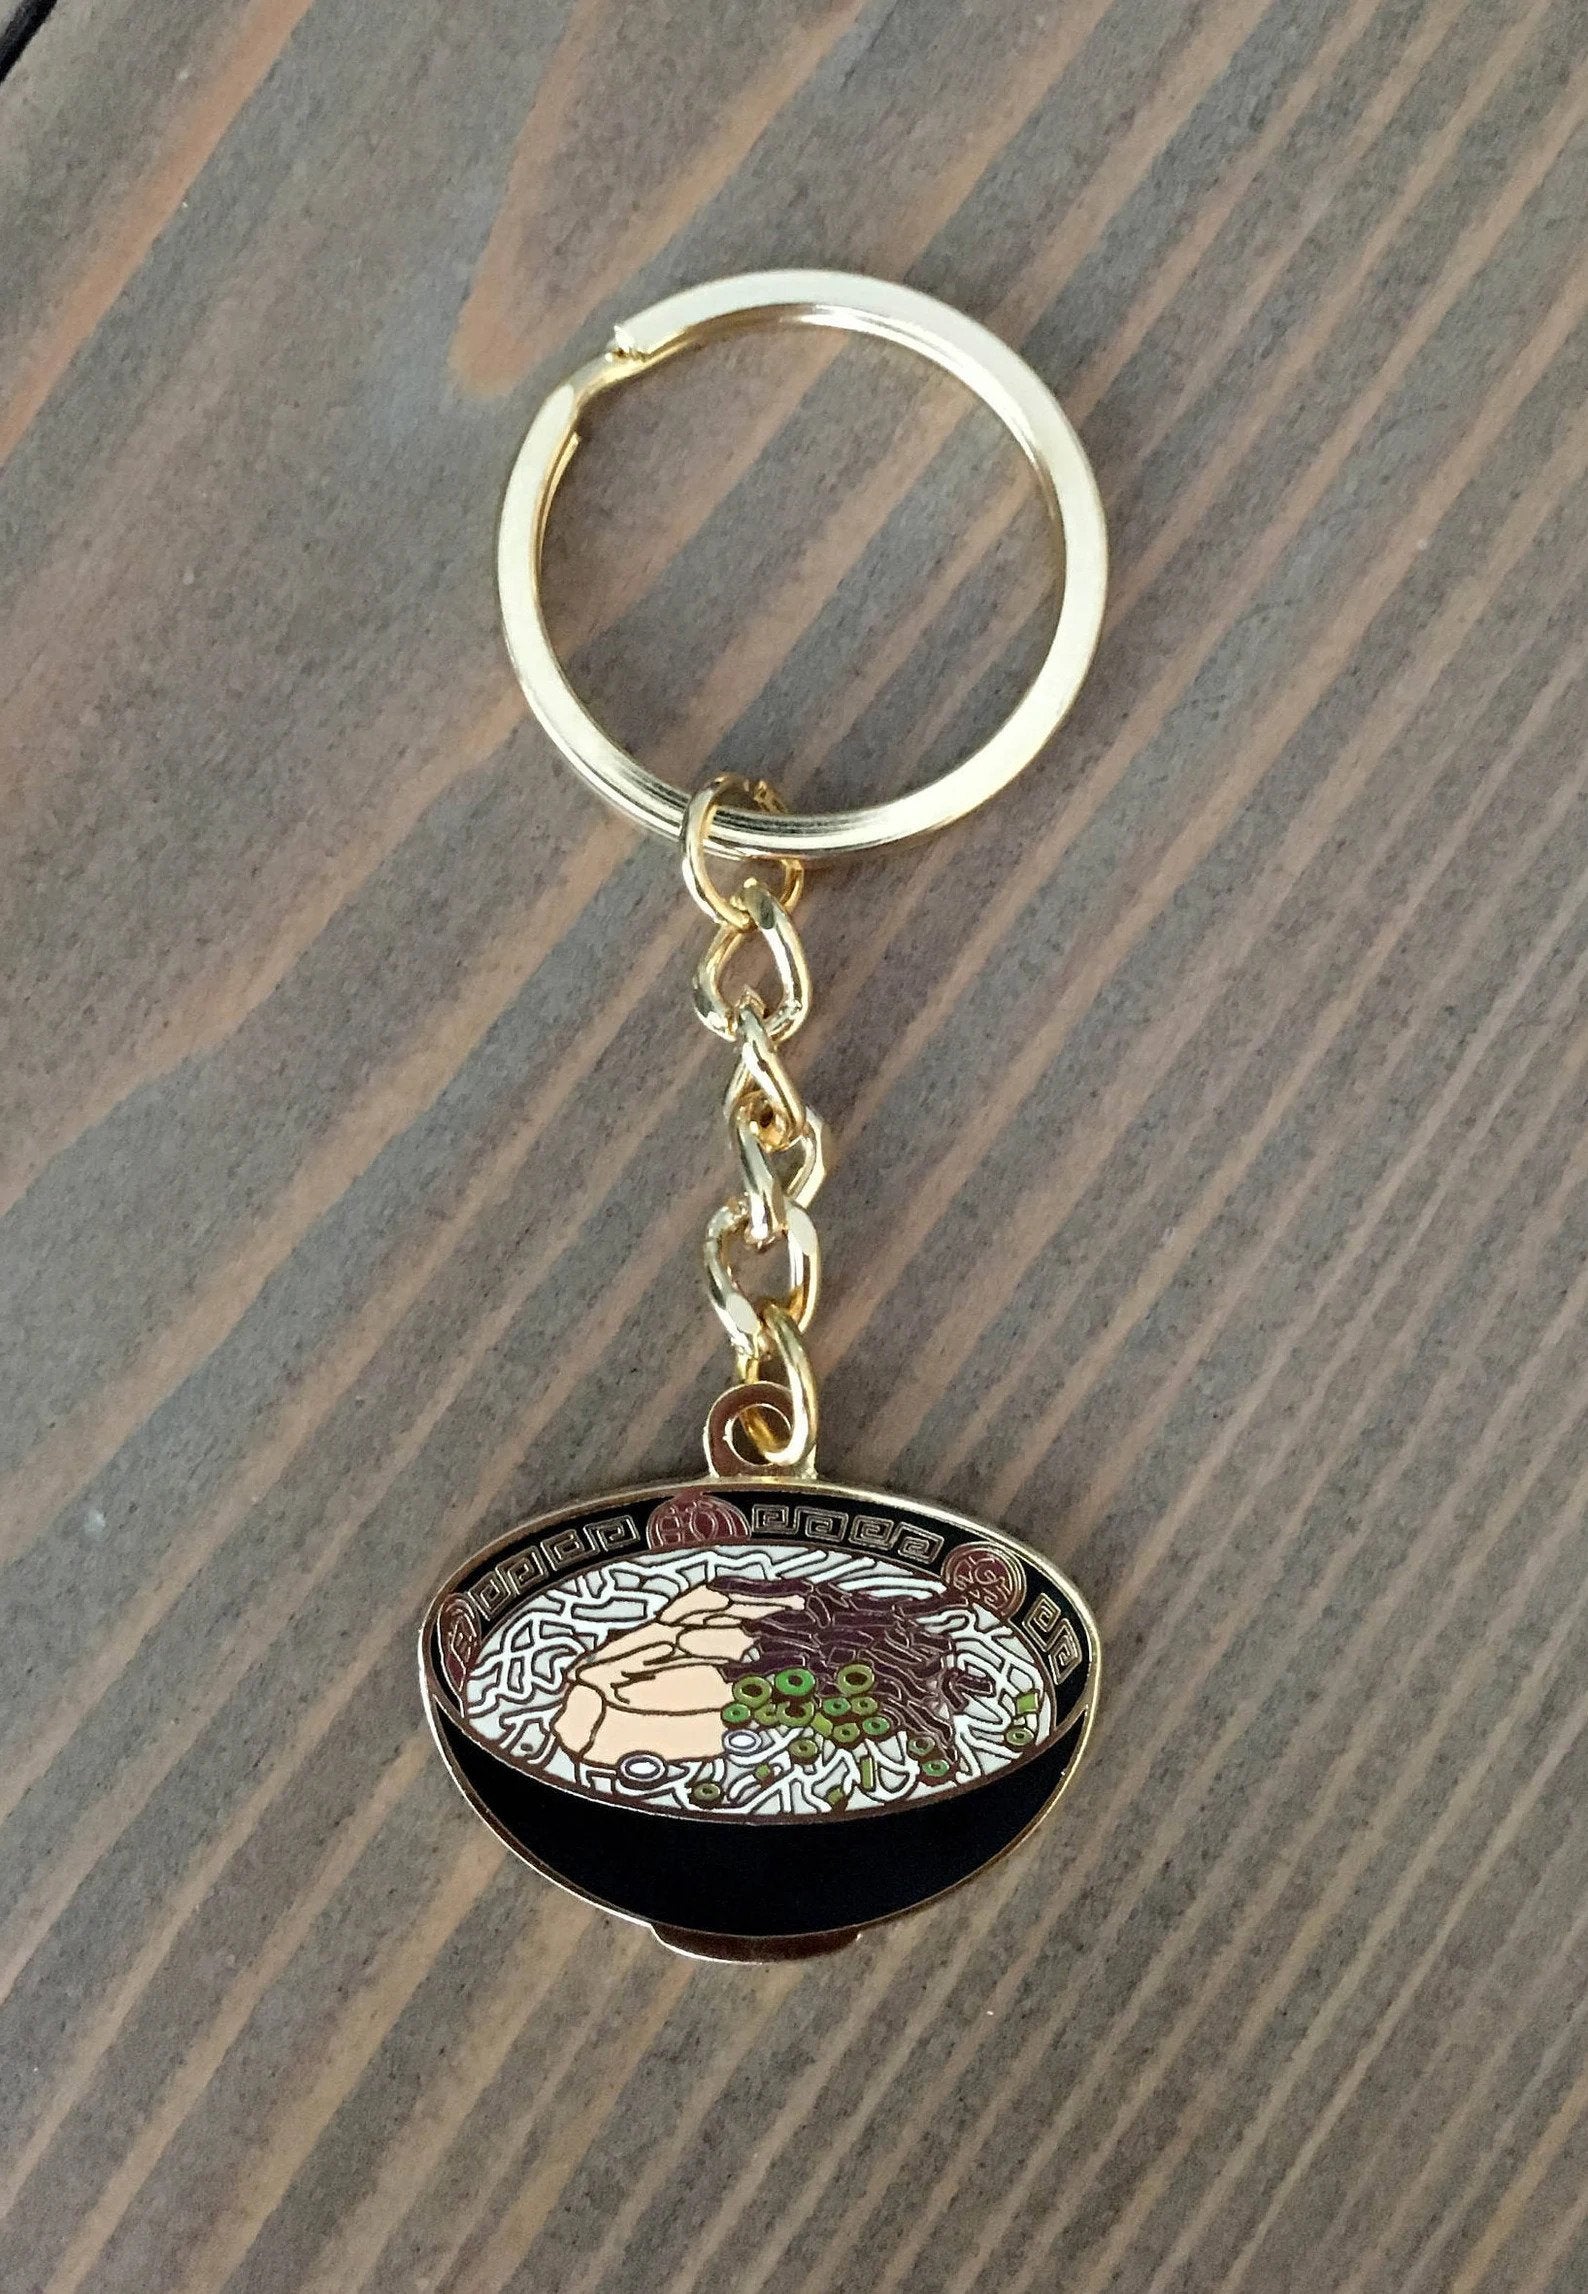 Black metal keychain designed as bowl of ramen